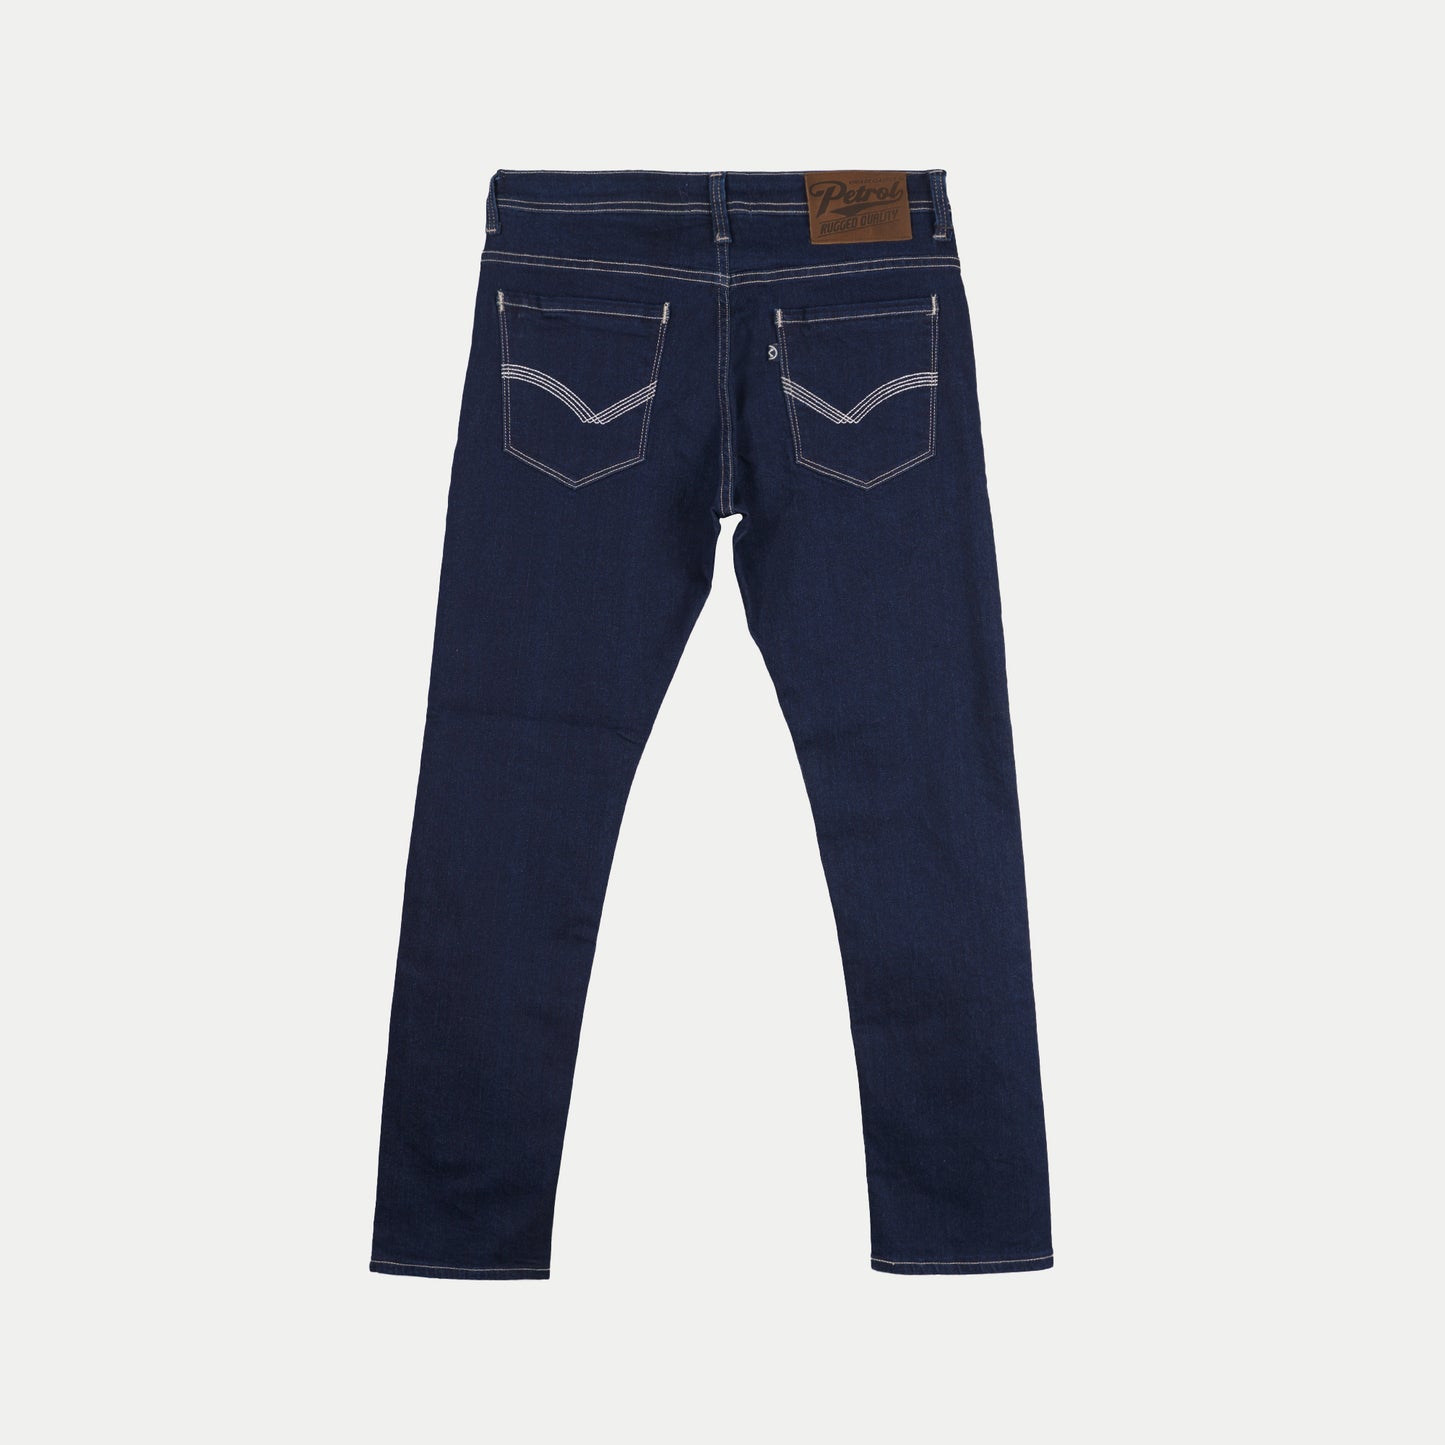 Petrol Basic Denim Pants for Men Skin Tight Fitting Mid Rise Trendy fashion Casual Bottoms Dark Shade Jeans for Men 150688-U (Dark Shade)